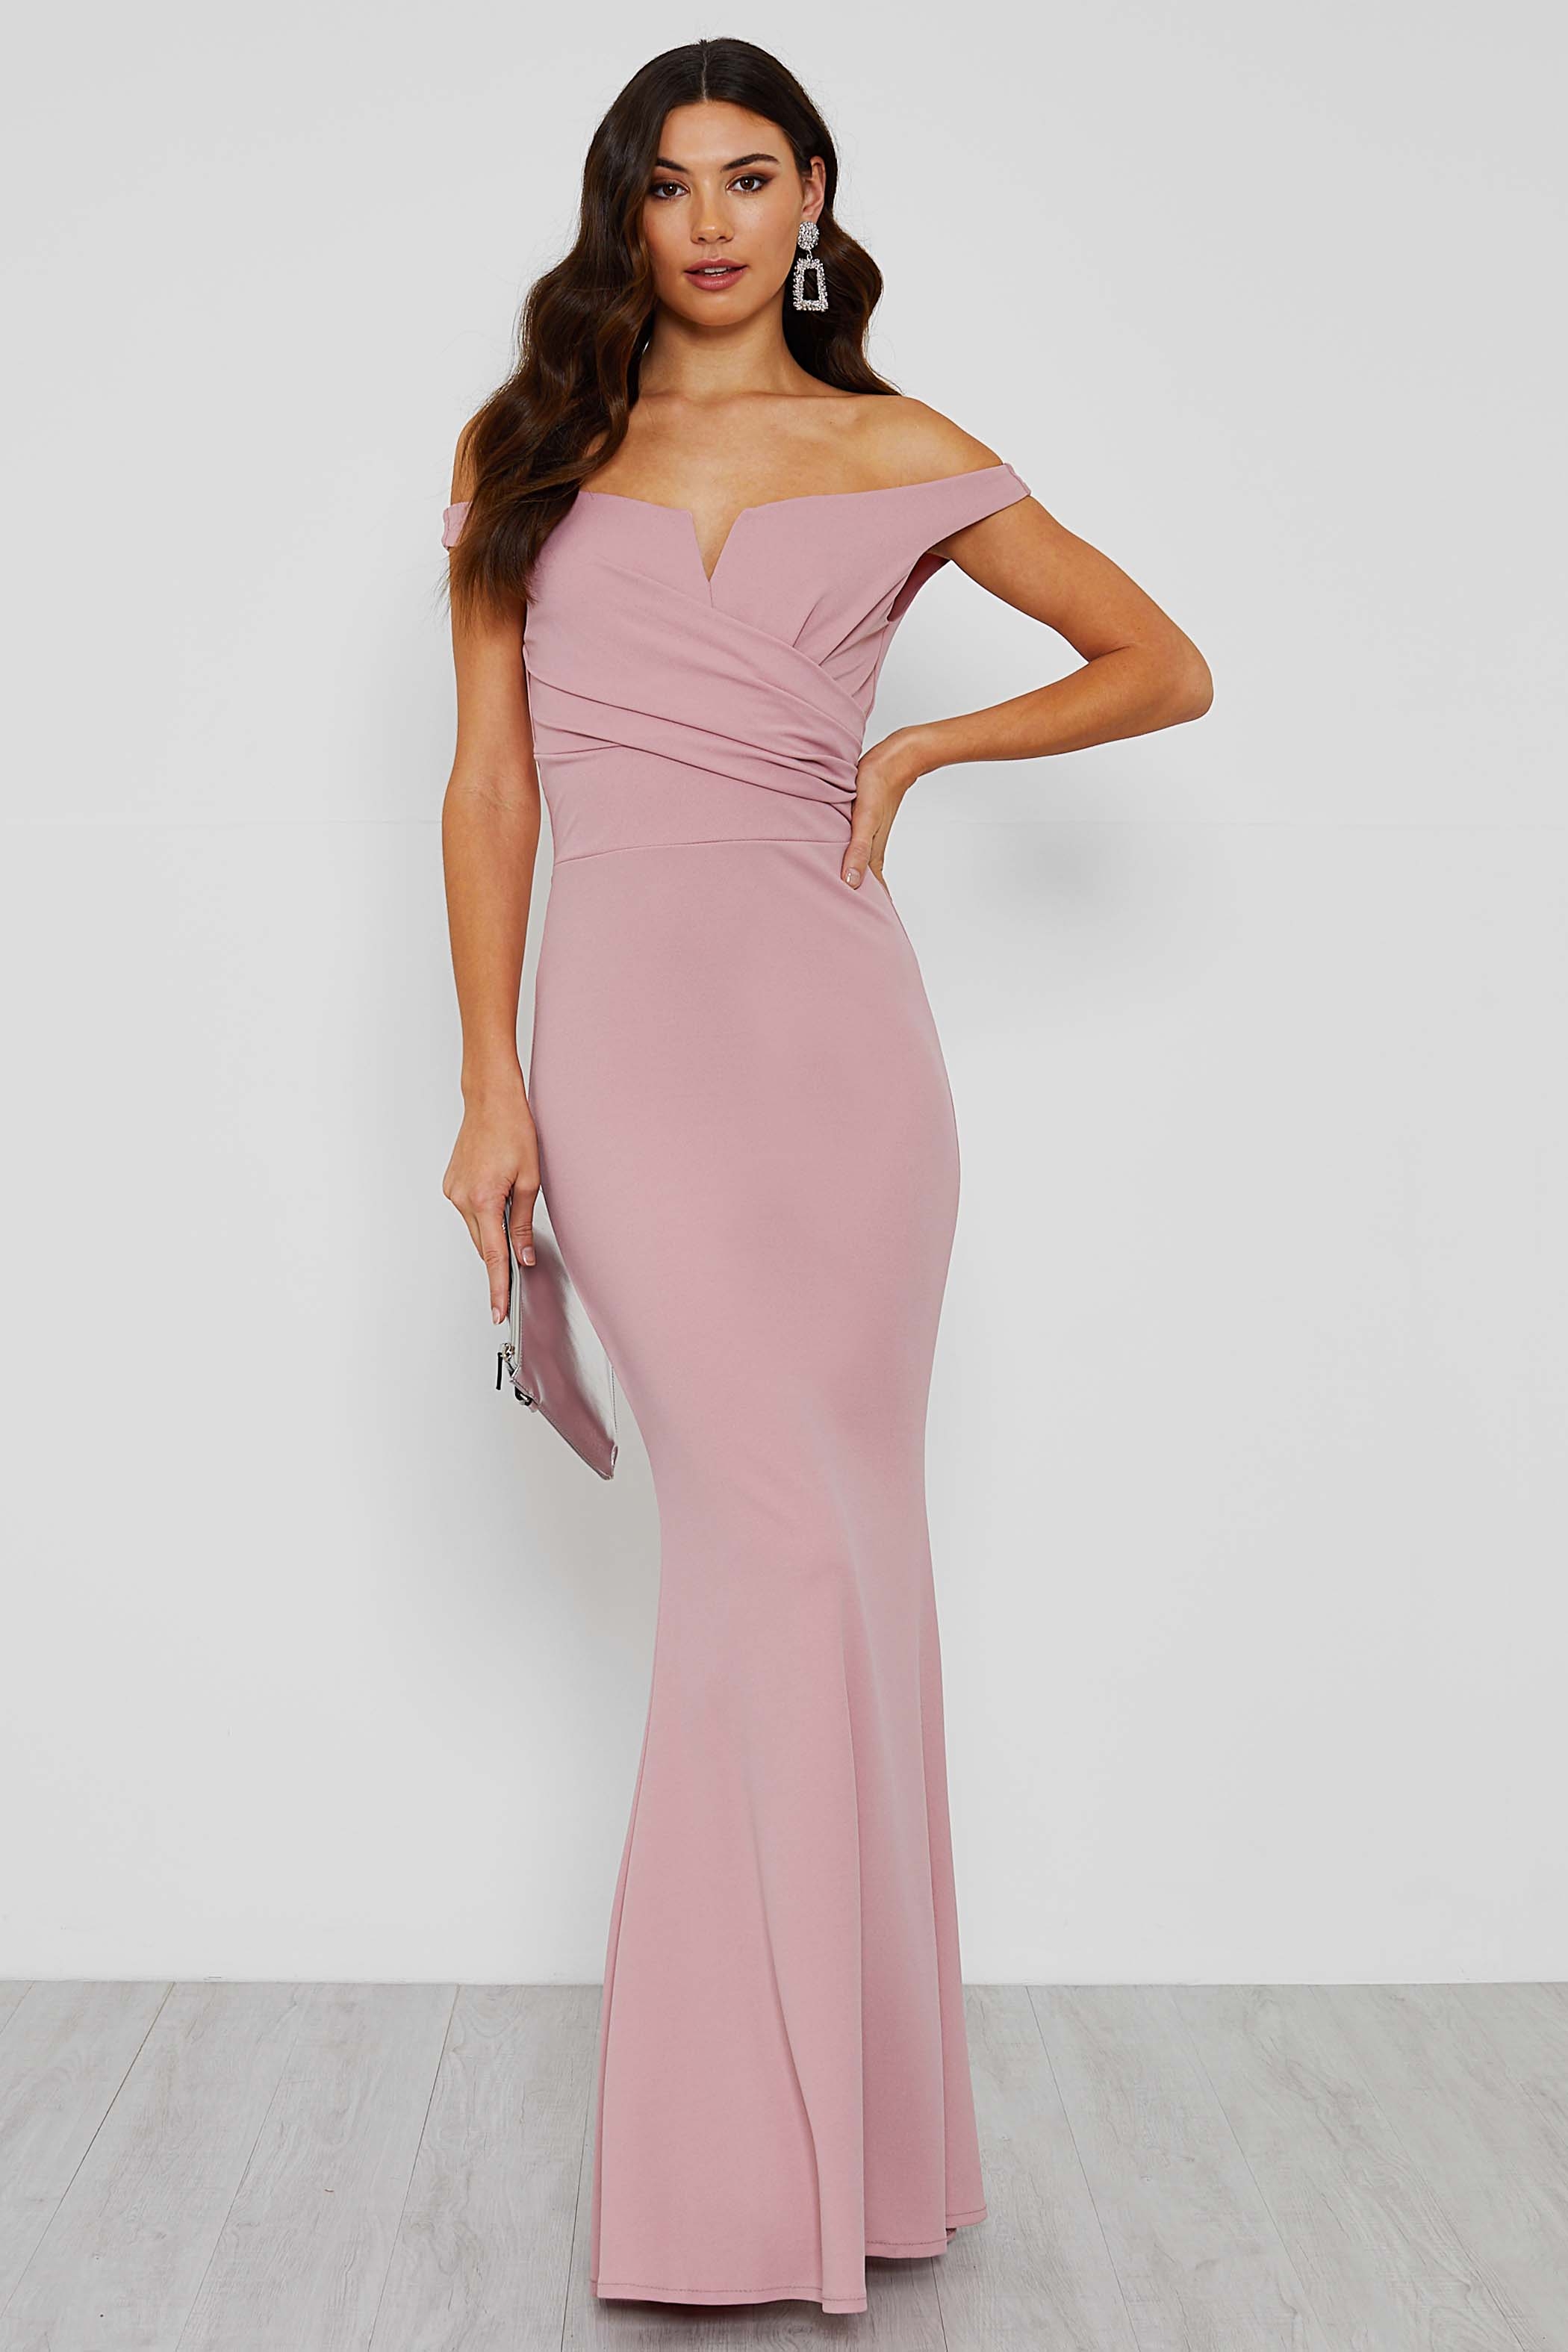 WalG Off Shoulder Pink Maxi Dress